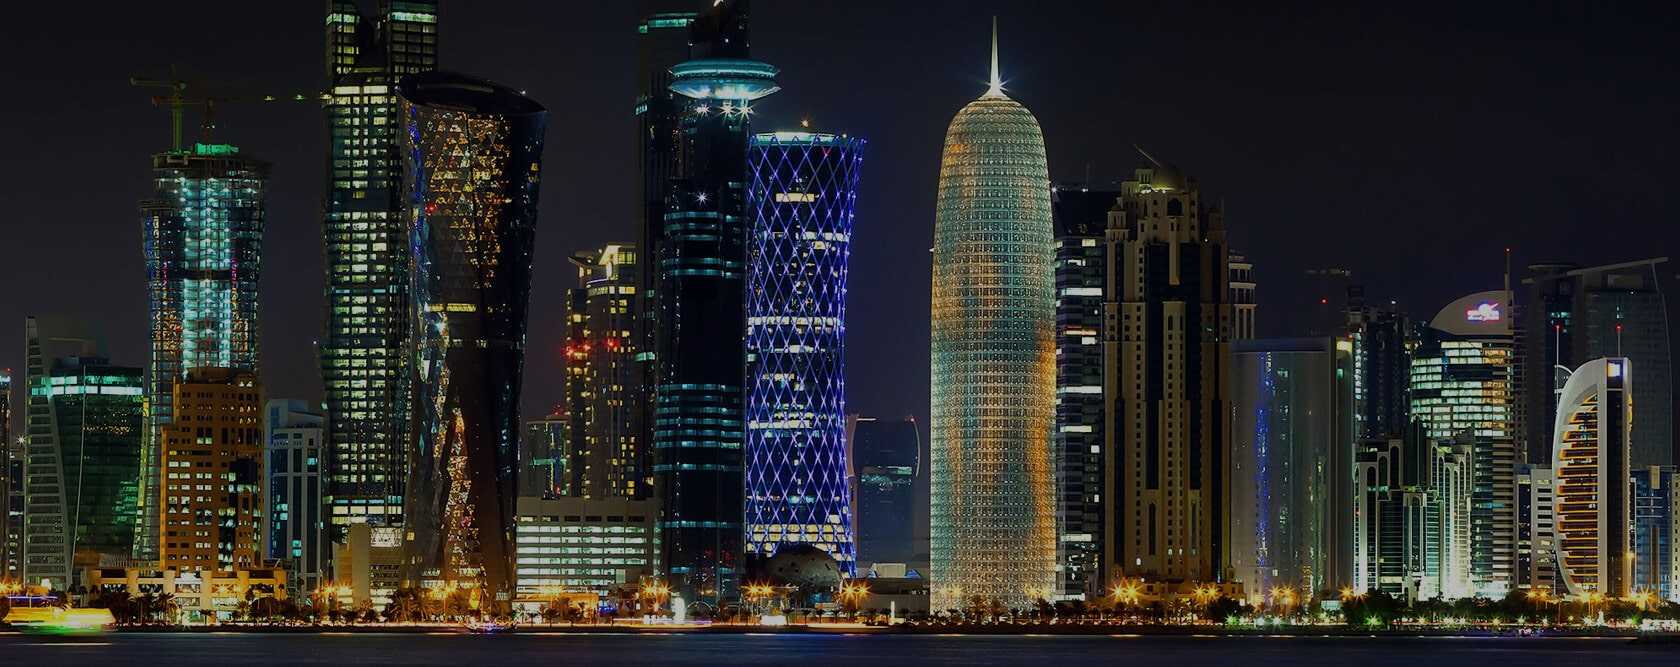 Qatar,qatar,Doha,doha,Maven Trading And Installation In Qatar,maven trading and installation in qatar,maven trading in qatar